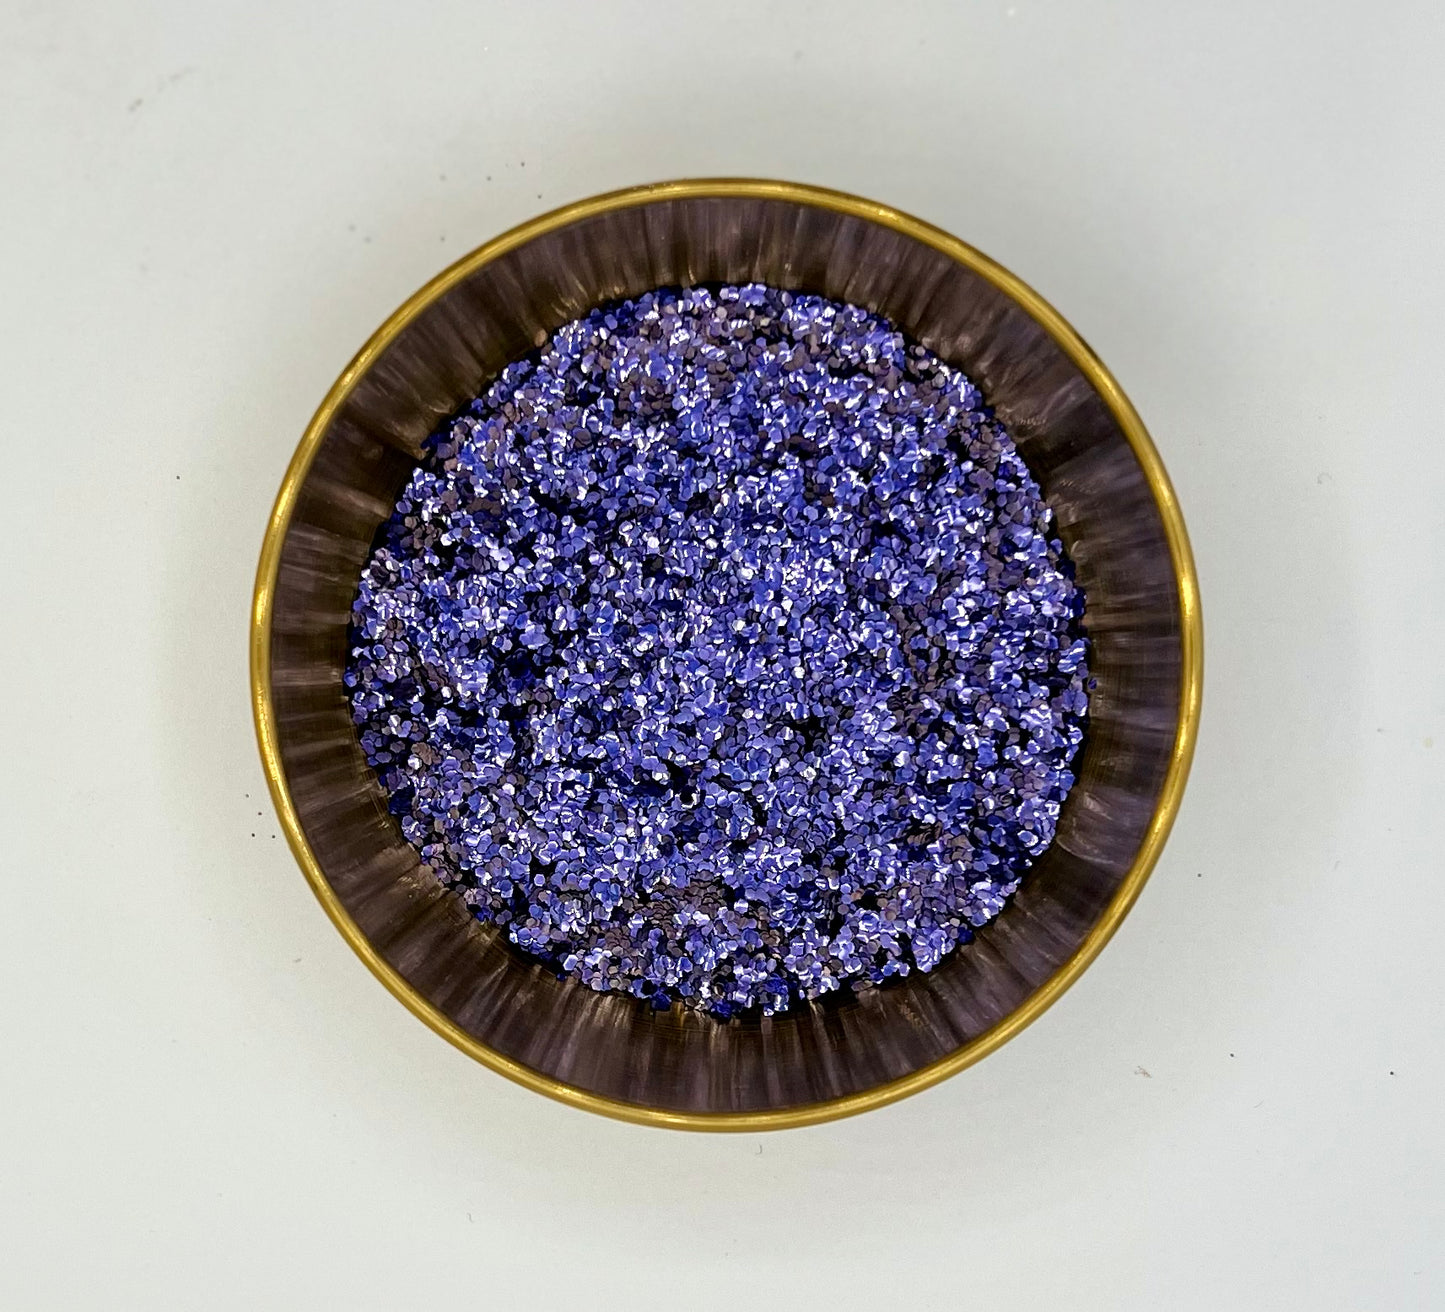 Beetlejuice Chunky Purple Biodegradable Glitter